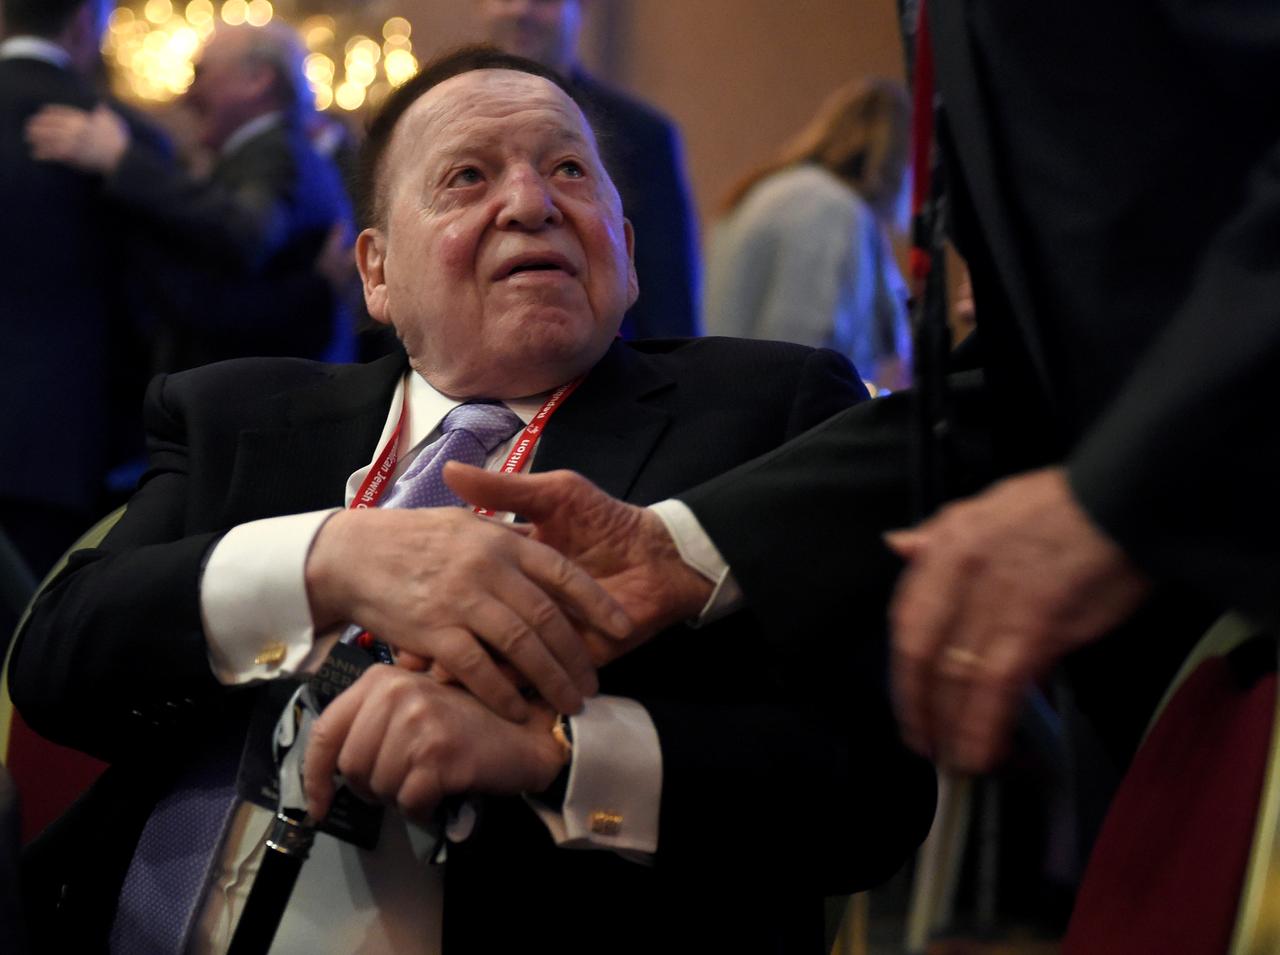 Anti-Online Poker Casino Giant Sheldon Adelson Receiving Cancer Treatment